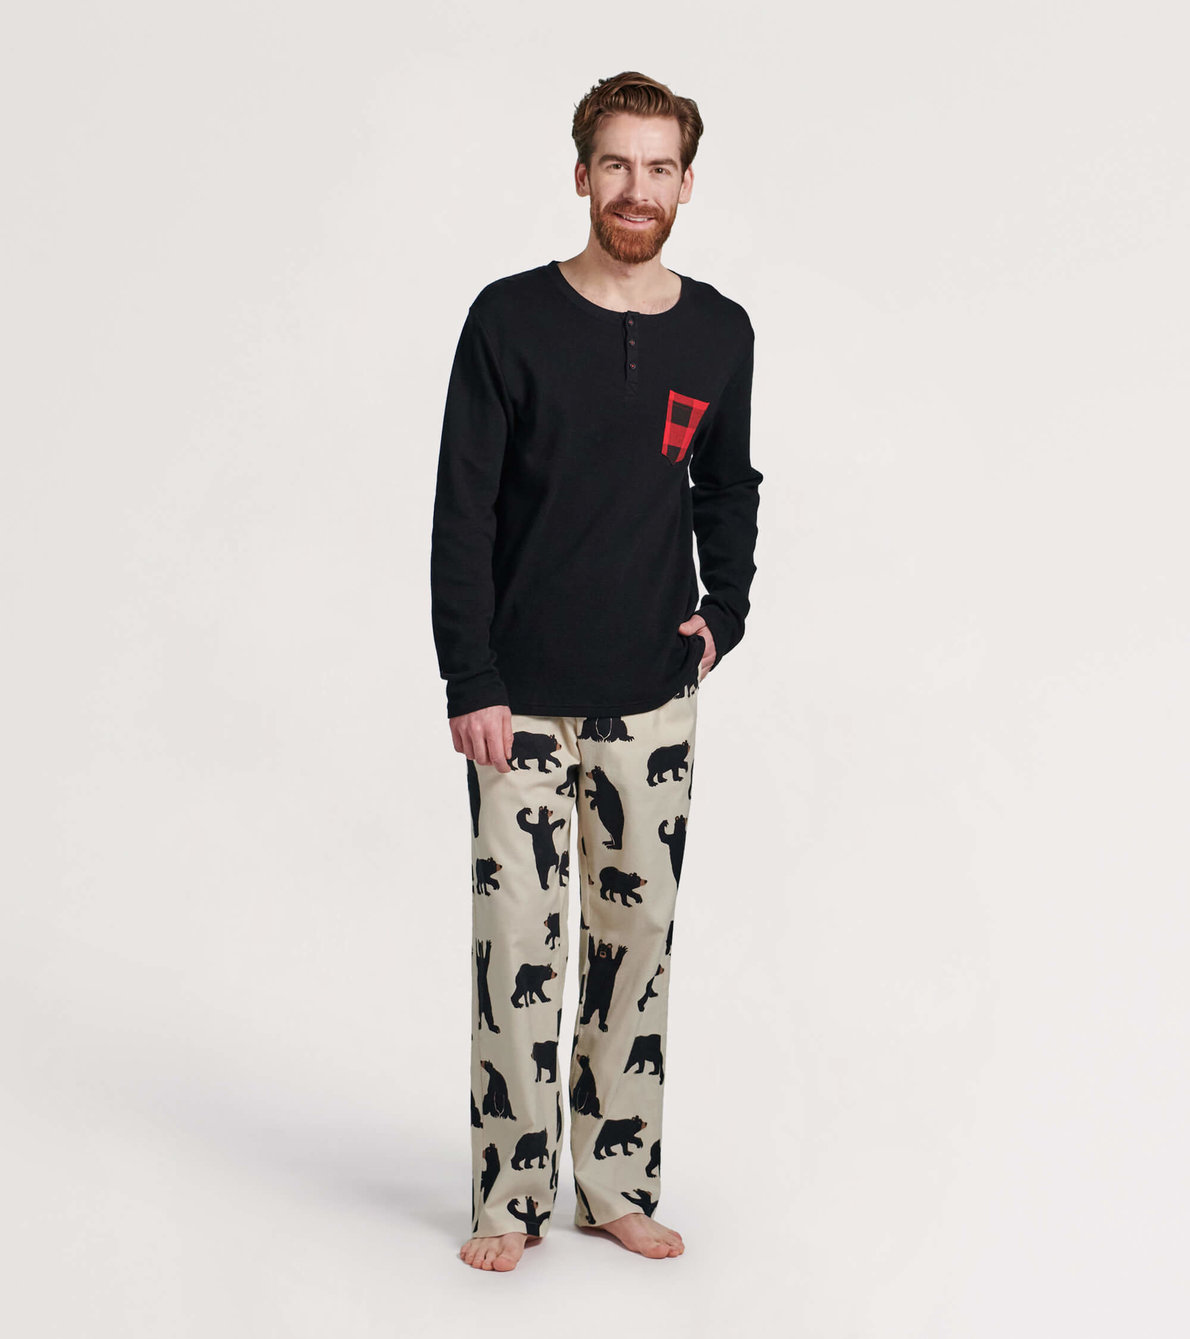 View larger image of Men's Black Bears Flannel Pajama Pants